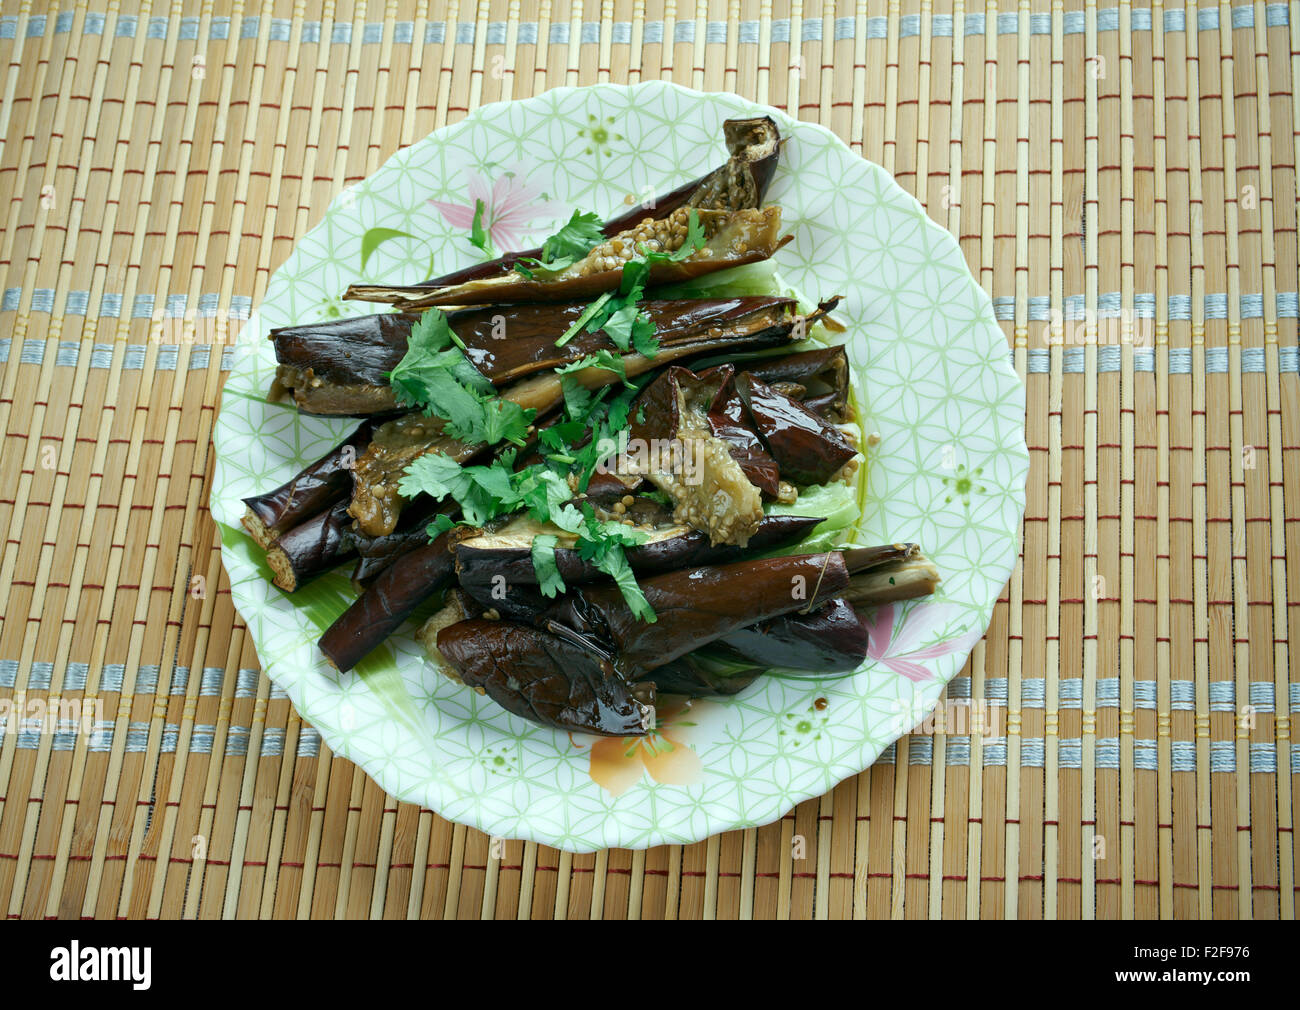 Karela nu shak - Indian vegetable dish Stock Photo